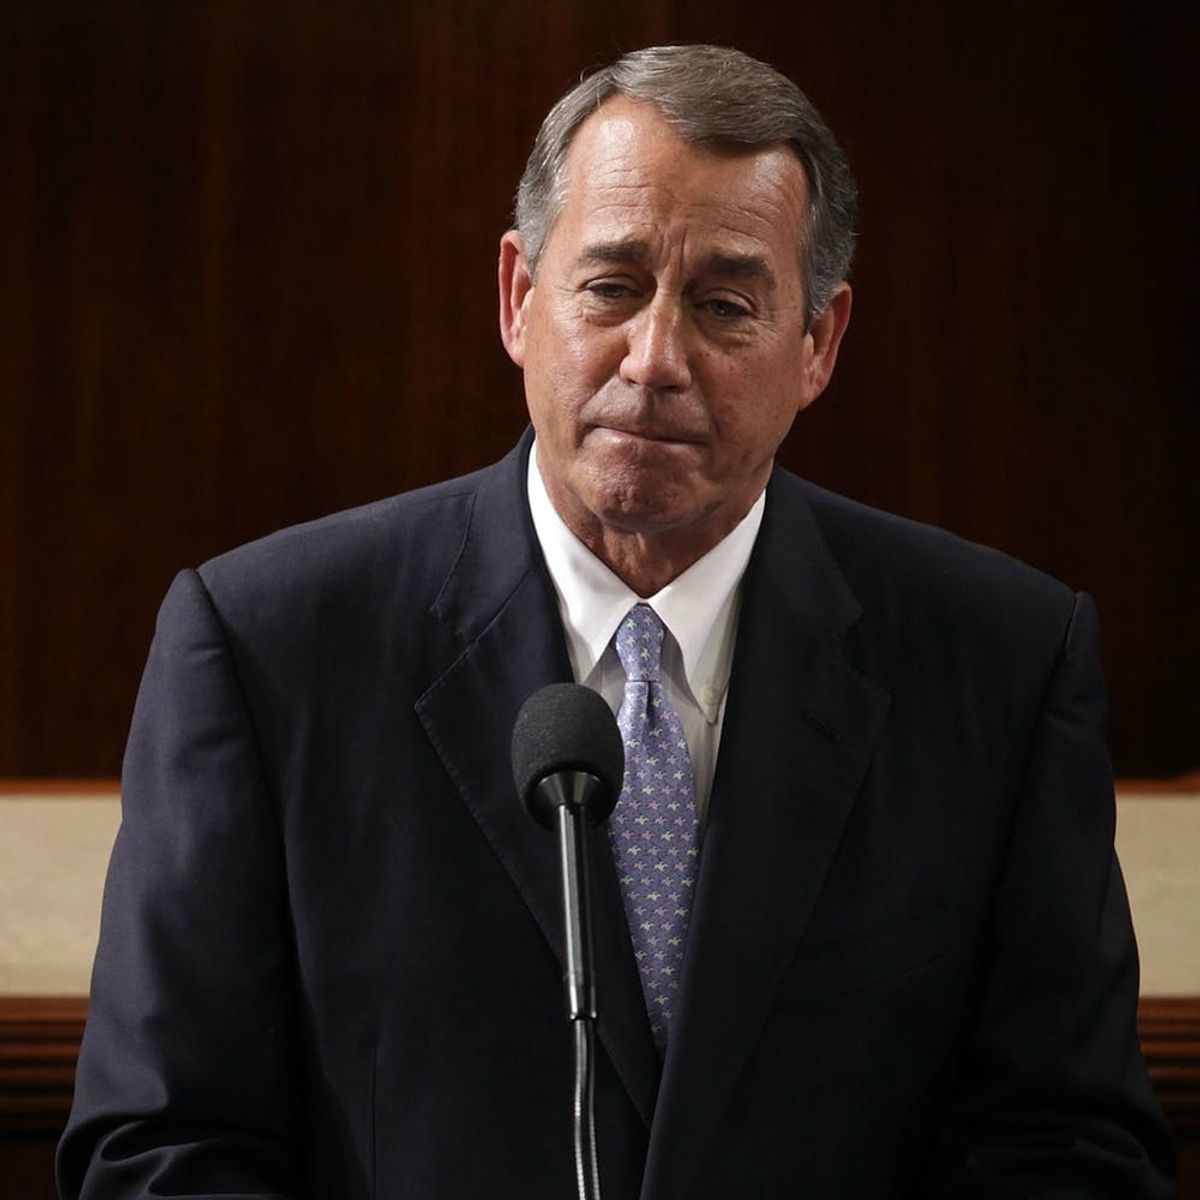 Former Republican House Speaker of the House John Boehner Has Joined a Marijuana Advisory Board